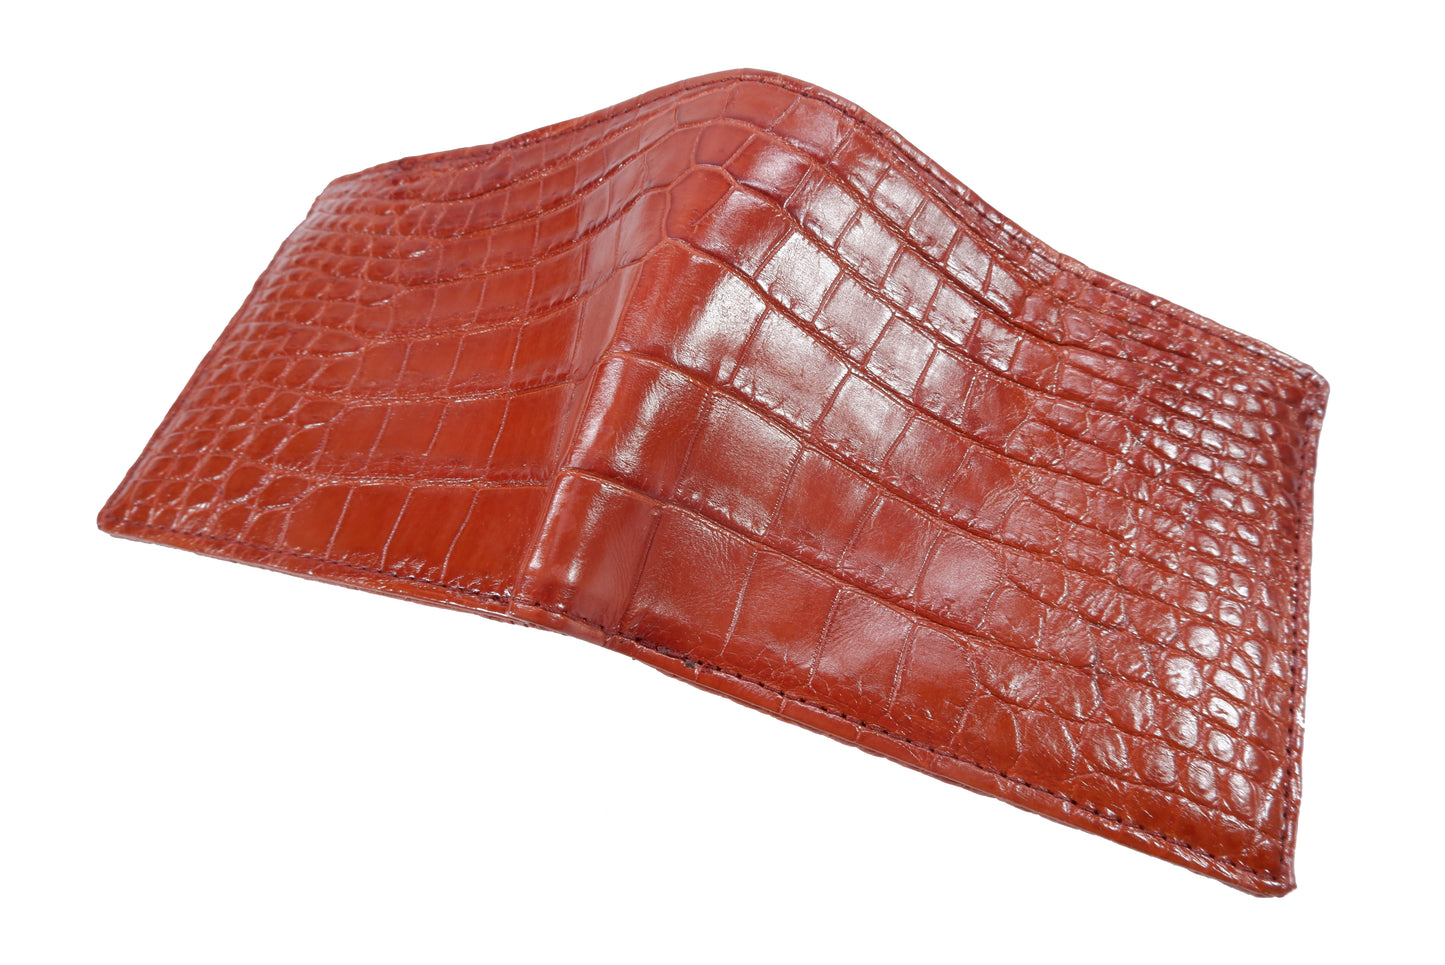 Genuine Crocodile Skin Leather Bifold Wallet with Crocodile Skin Interior